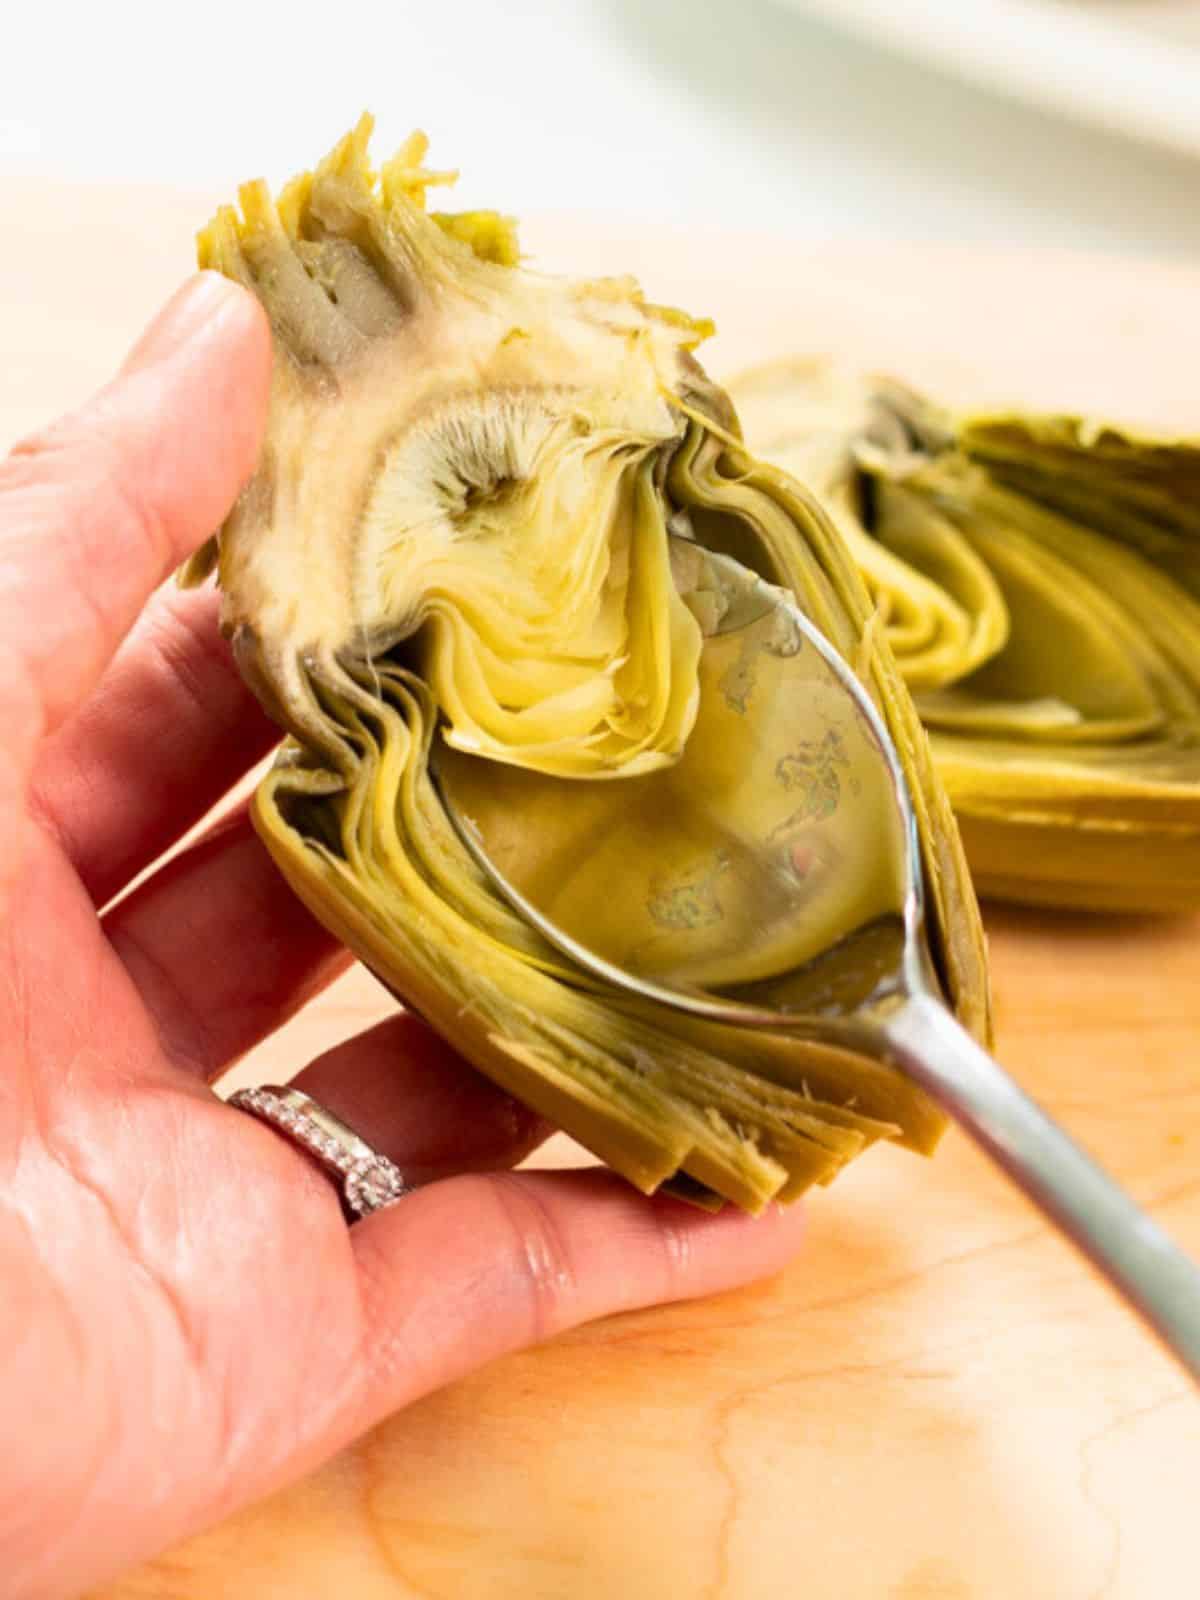 Artichoke cut in half and spoon removing thistle from heart of artichoke.